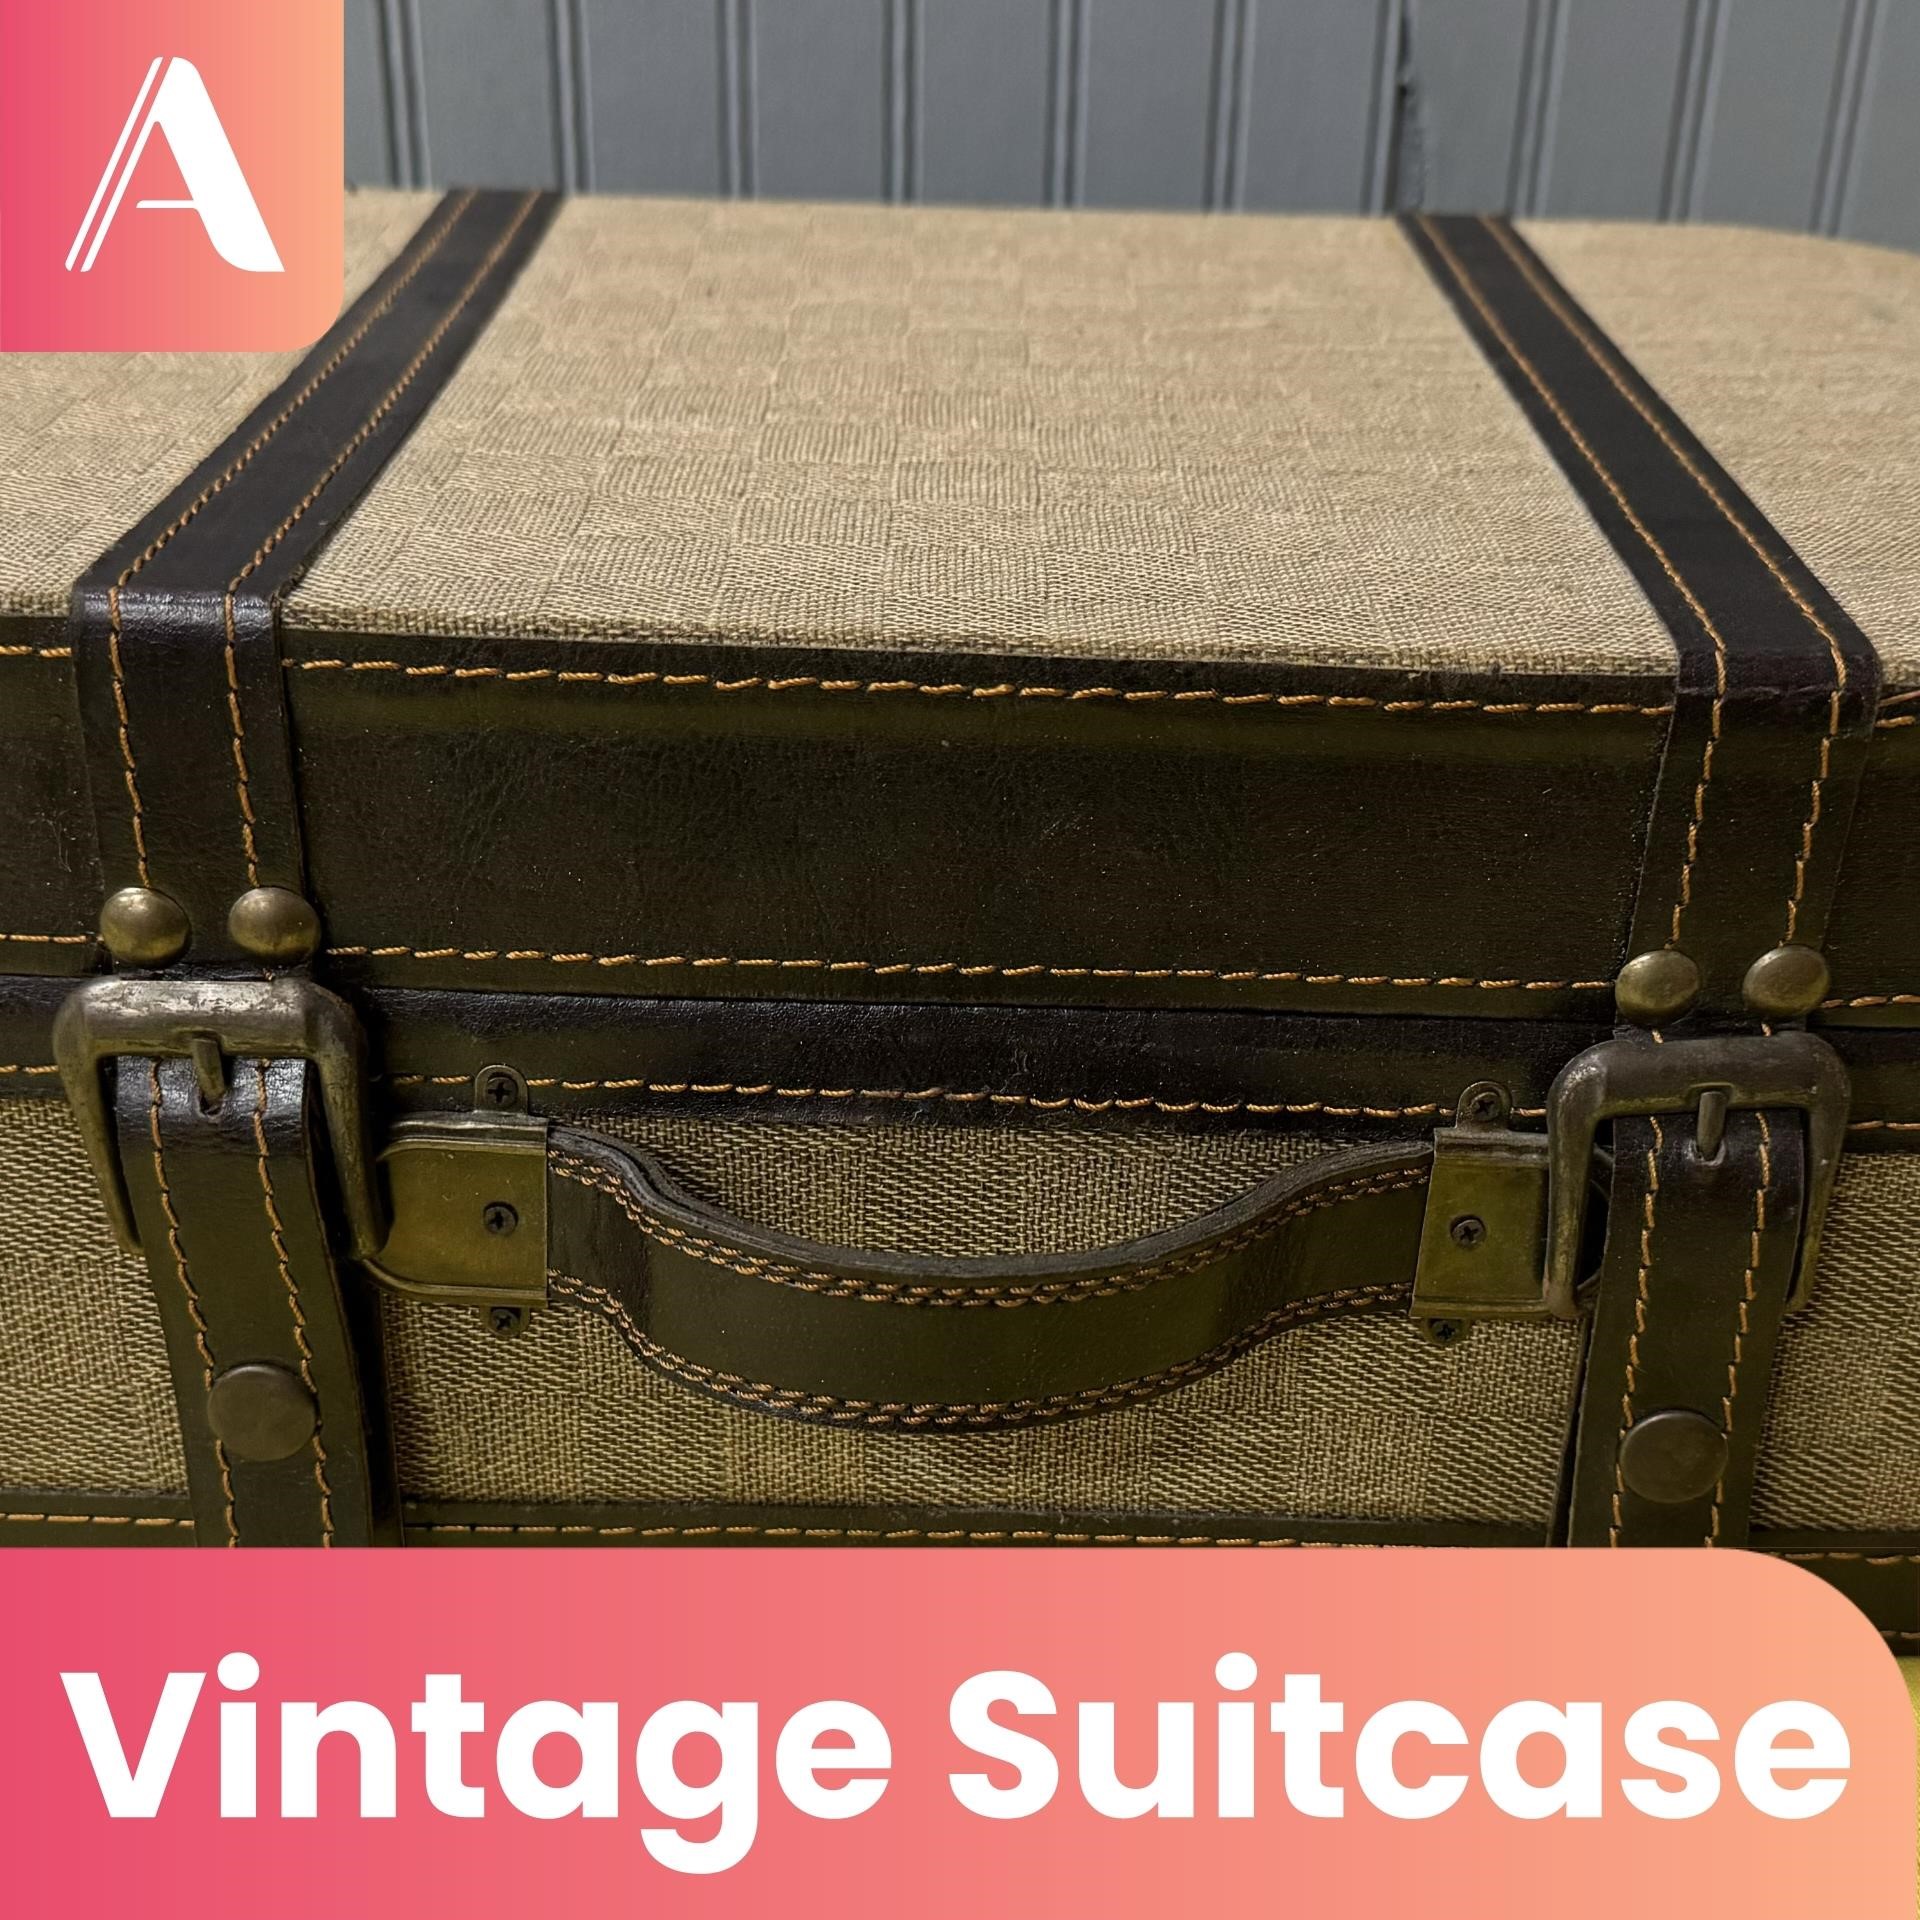 Vintage Style Suitcase